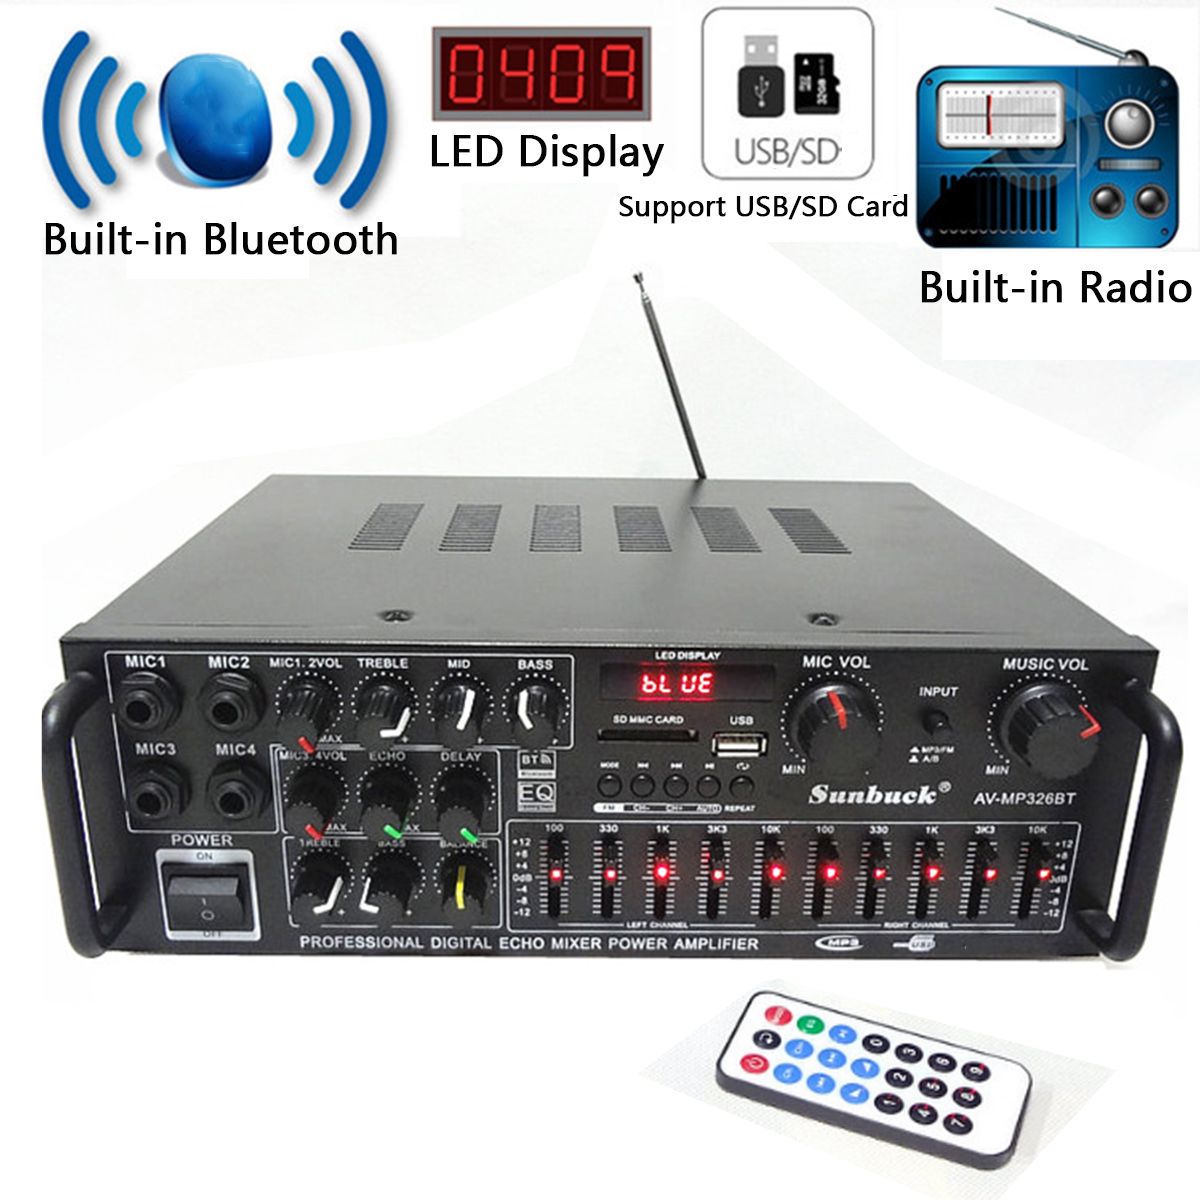 Sunbuck-AV-MP326BT-220V-800W-4-ohm-2CH-EQ-bluetooth-Stereo-Amplifier-Support-USB-Disk-SD-Card-1244613